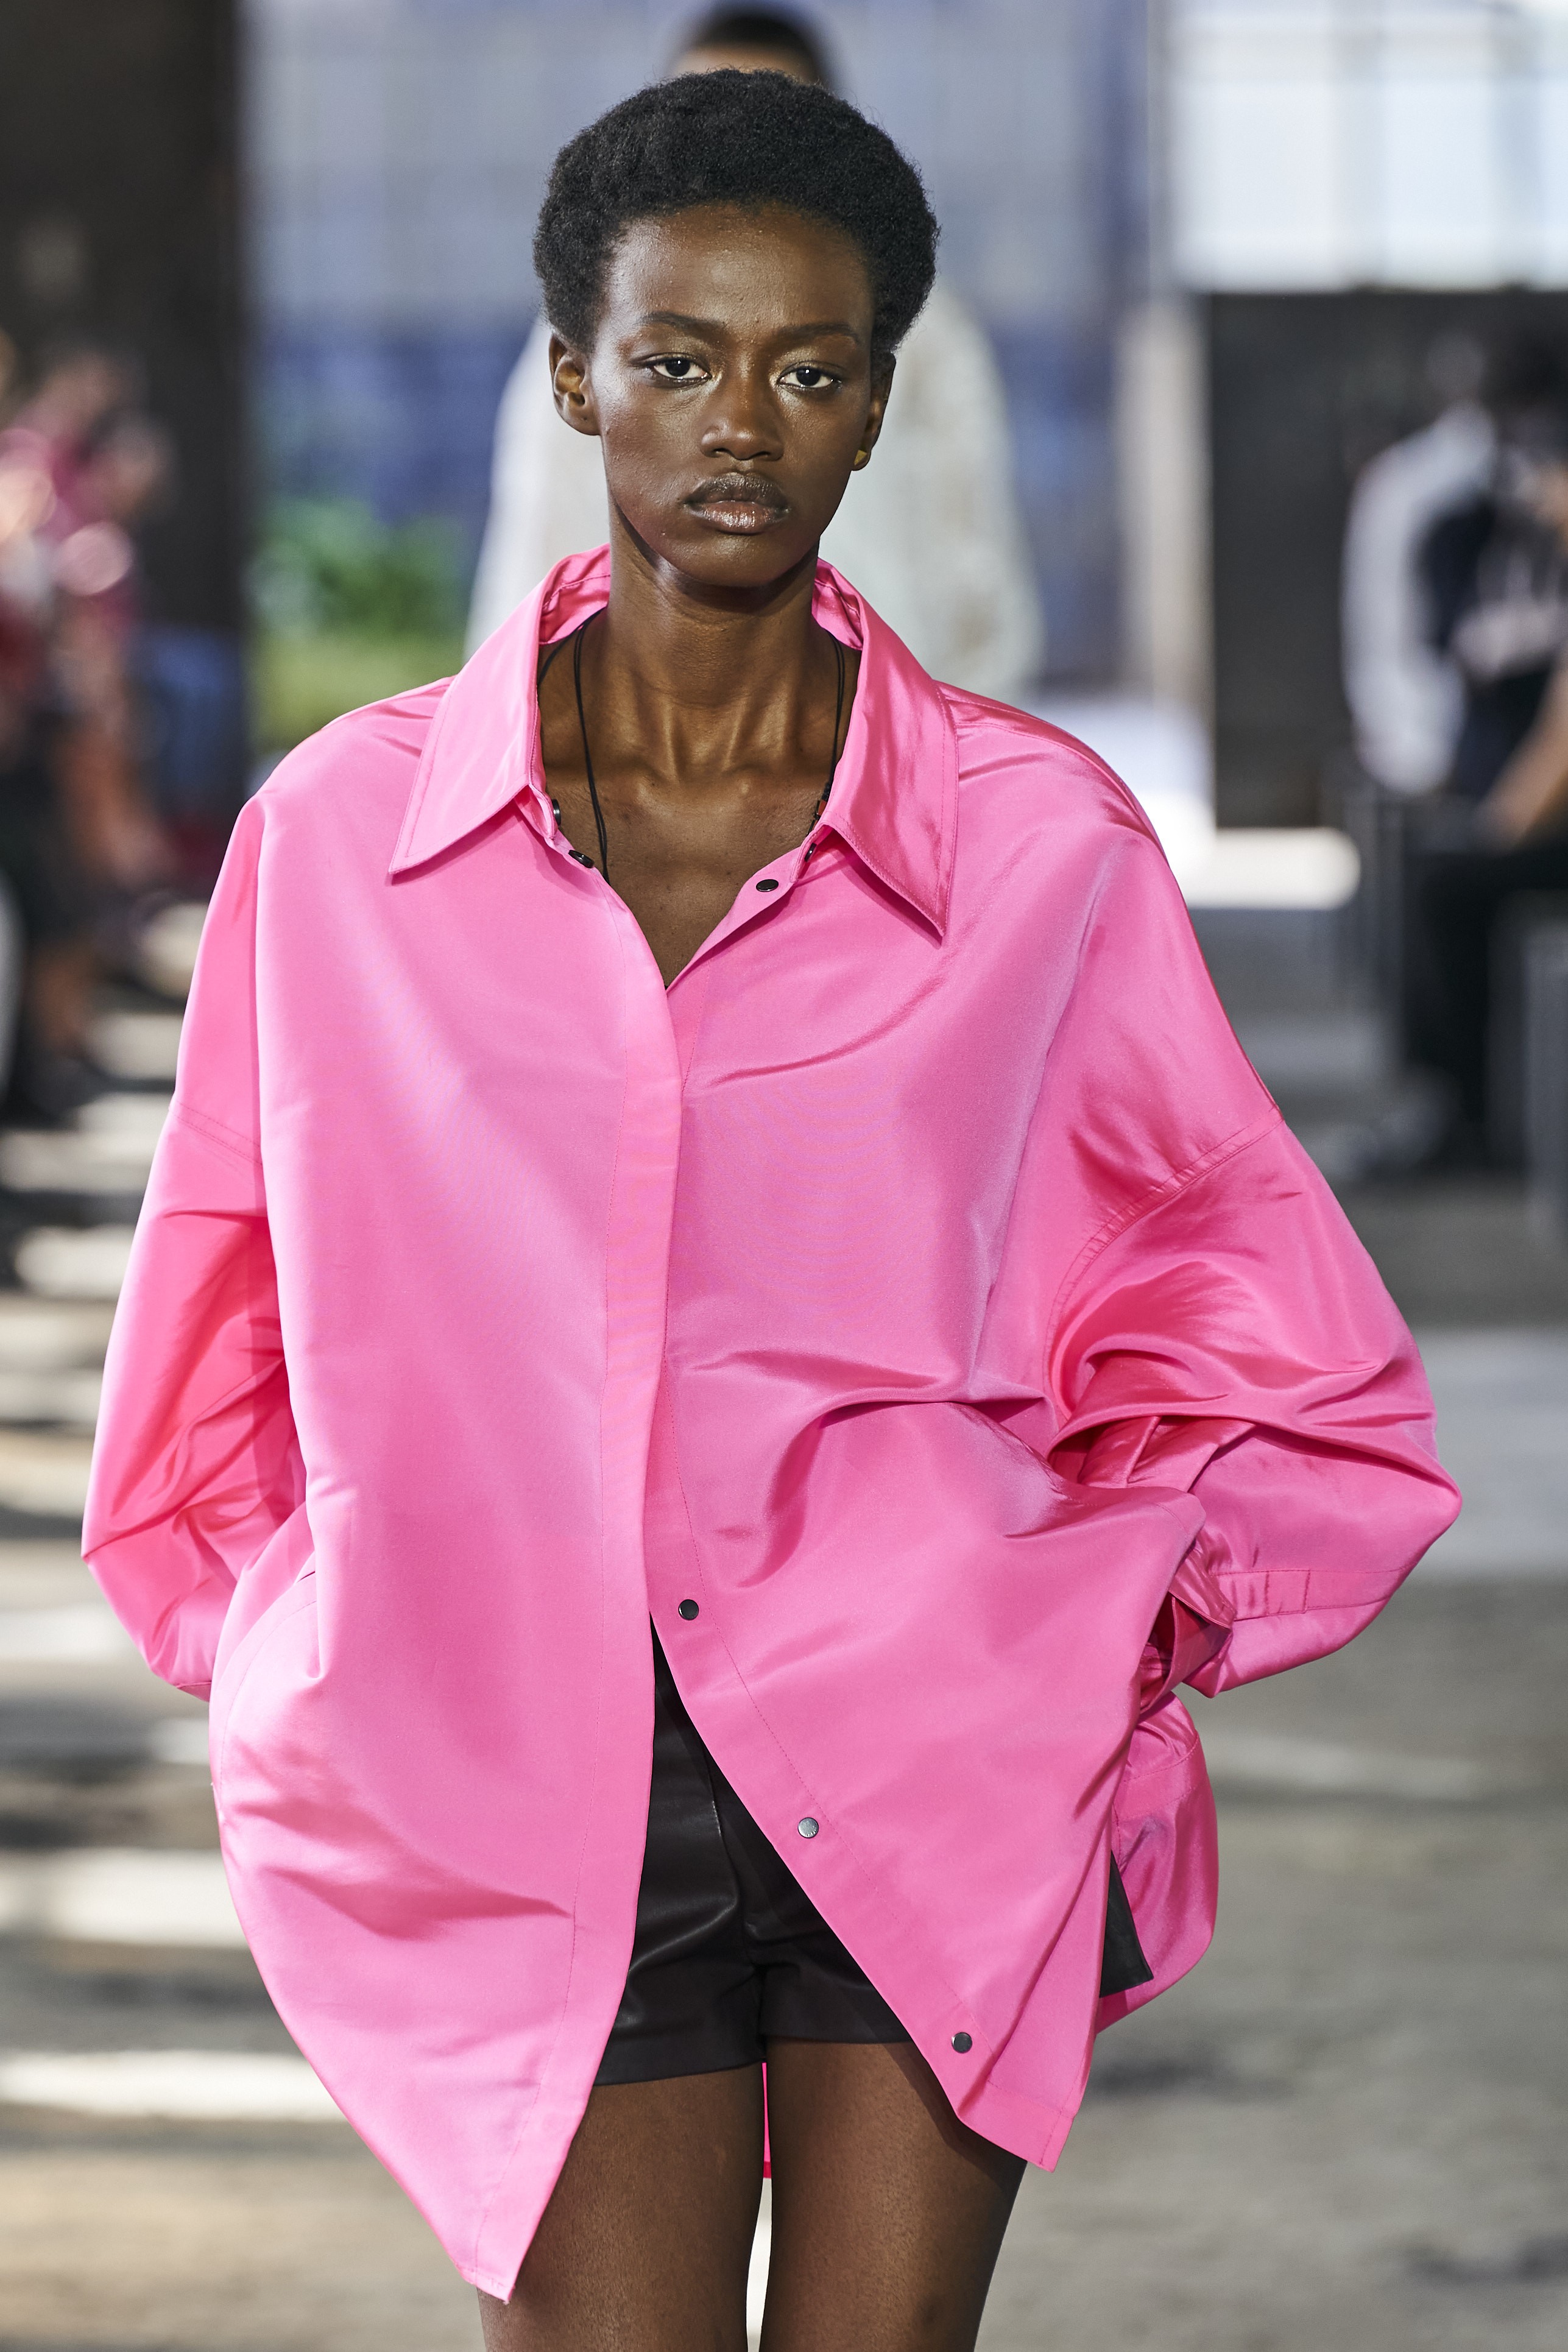 50 Tons De Rosa Dicas Para Usar A Cor Segundo As Passarelas Do Verao 2021 Vogue Moda